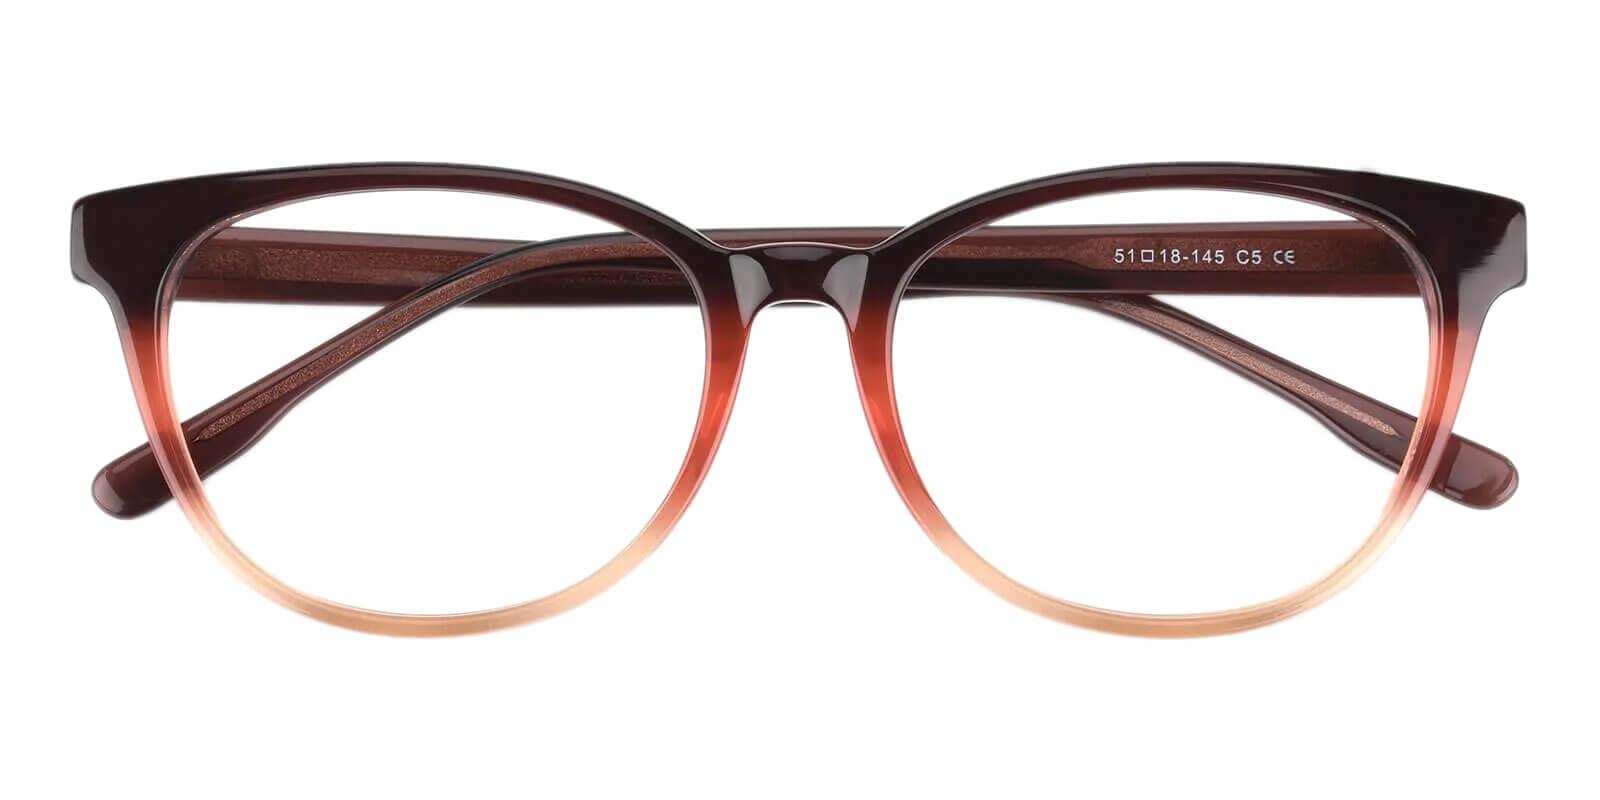 Bouquet Brown Acetate Eyeglasses , SpringHinges , UniversalBridgeFit Frames from ABBE Glasses